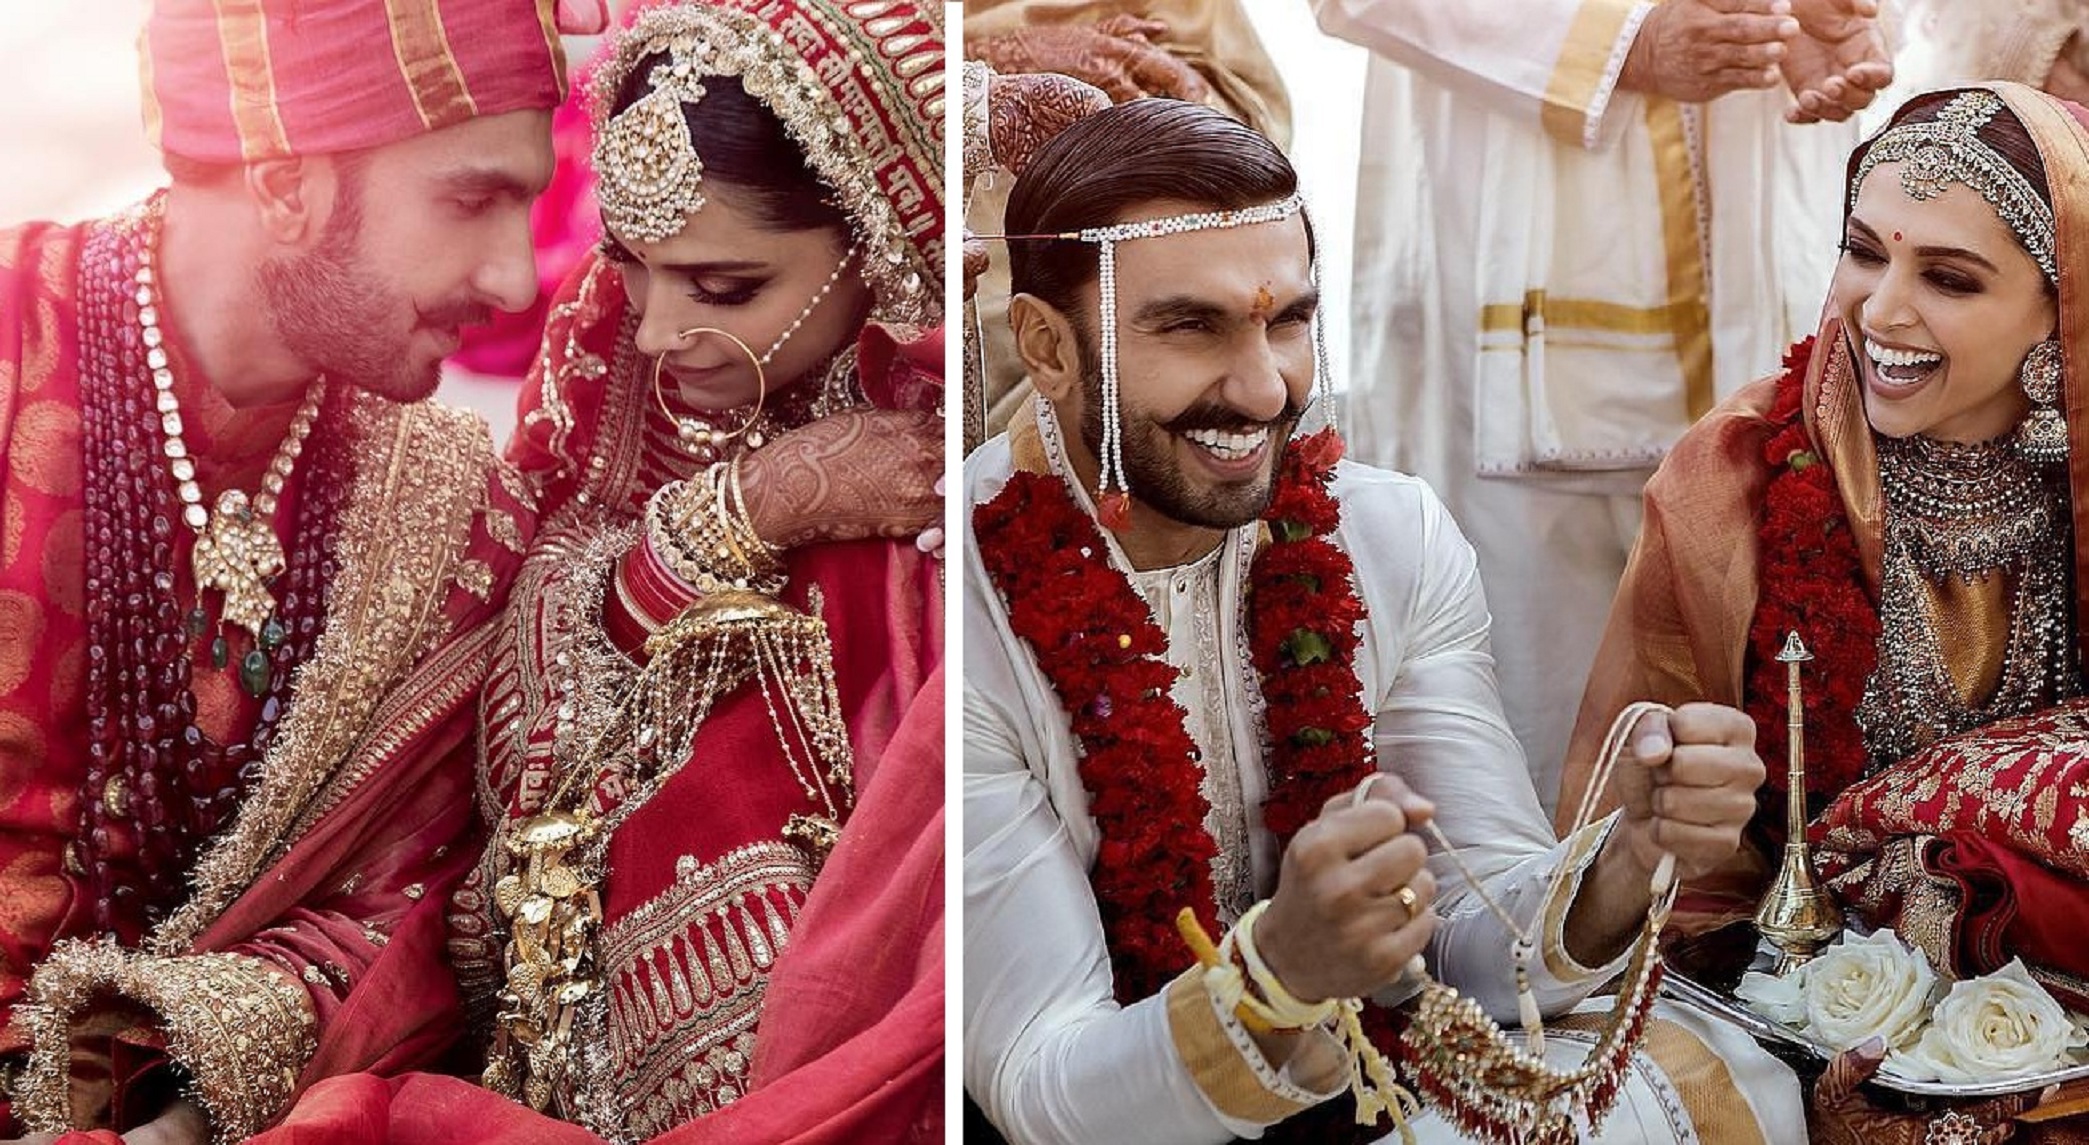 3 Years Ago, Deepika Padukone And Ranveer Singh Married In Italy’s Lake Como – Revisit Their Beautiful Wedding Pictures Here